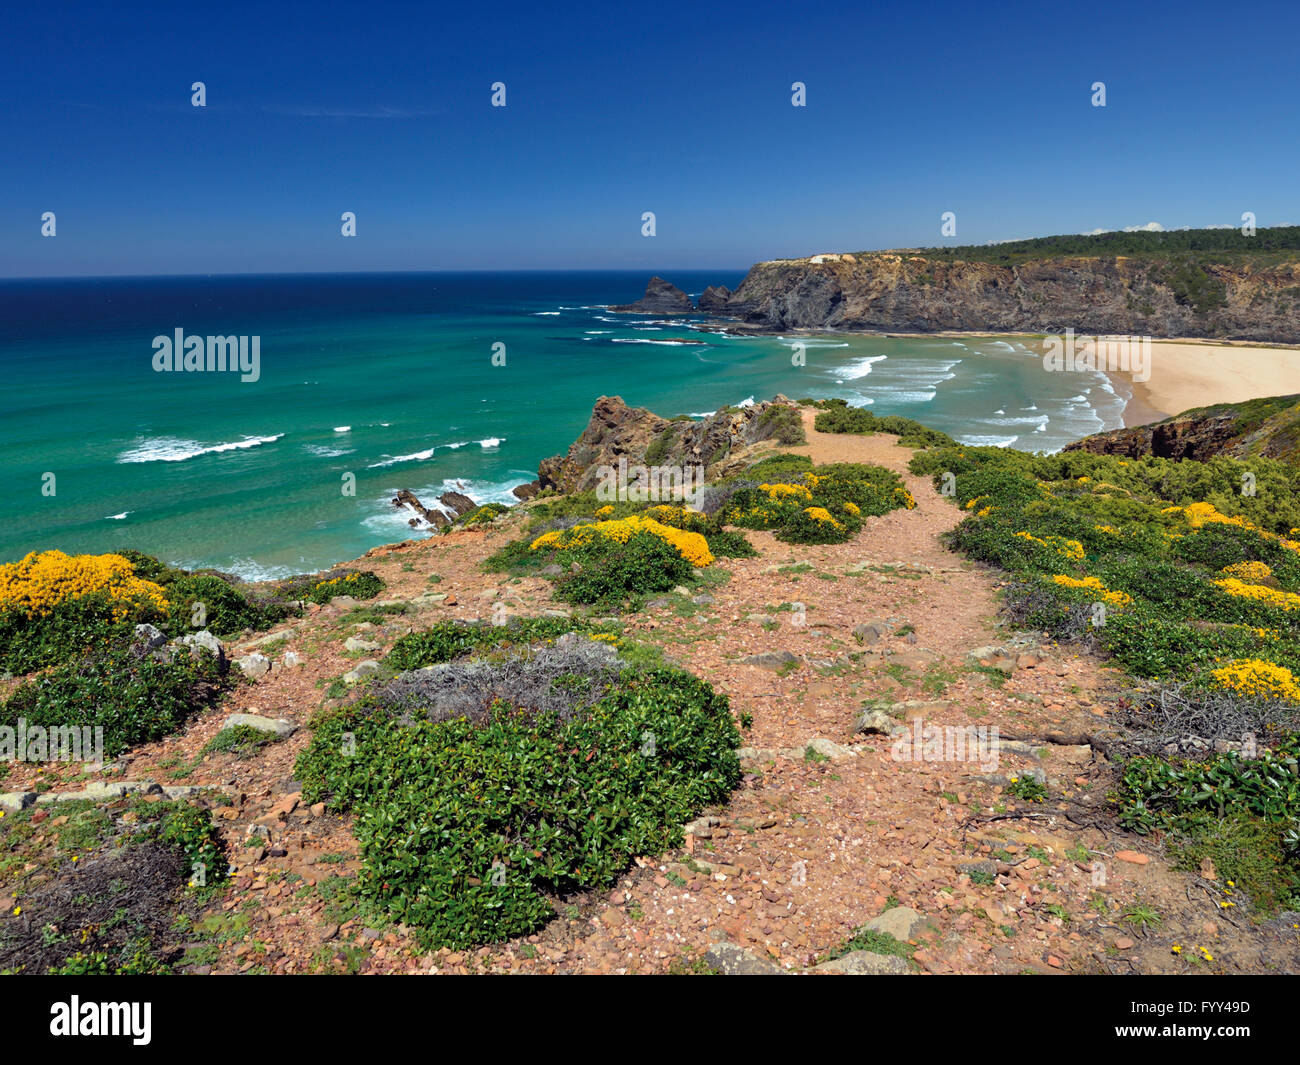 Portugal, Algarve:  Sea view from cliffs with coastal vegetation to natural beach Praia de Odeceixe Stock Photo